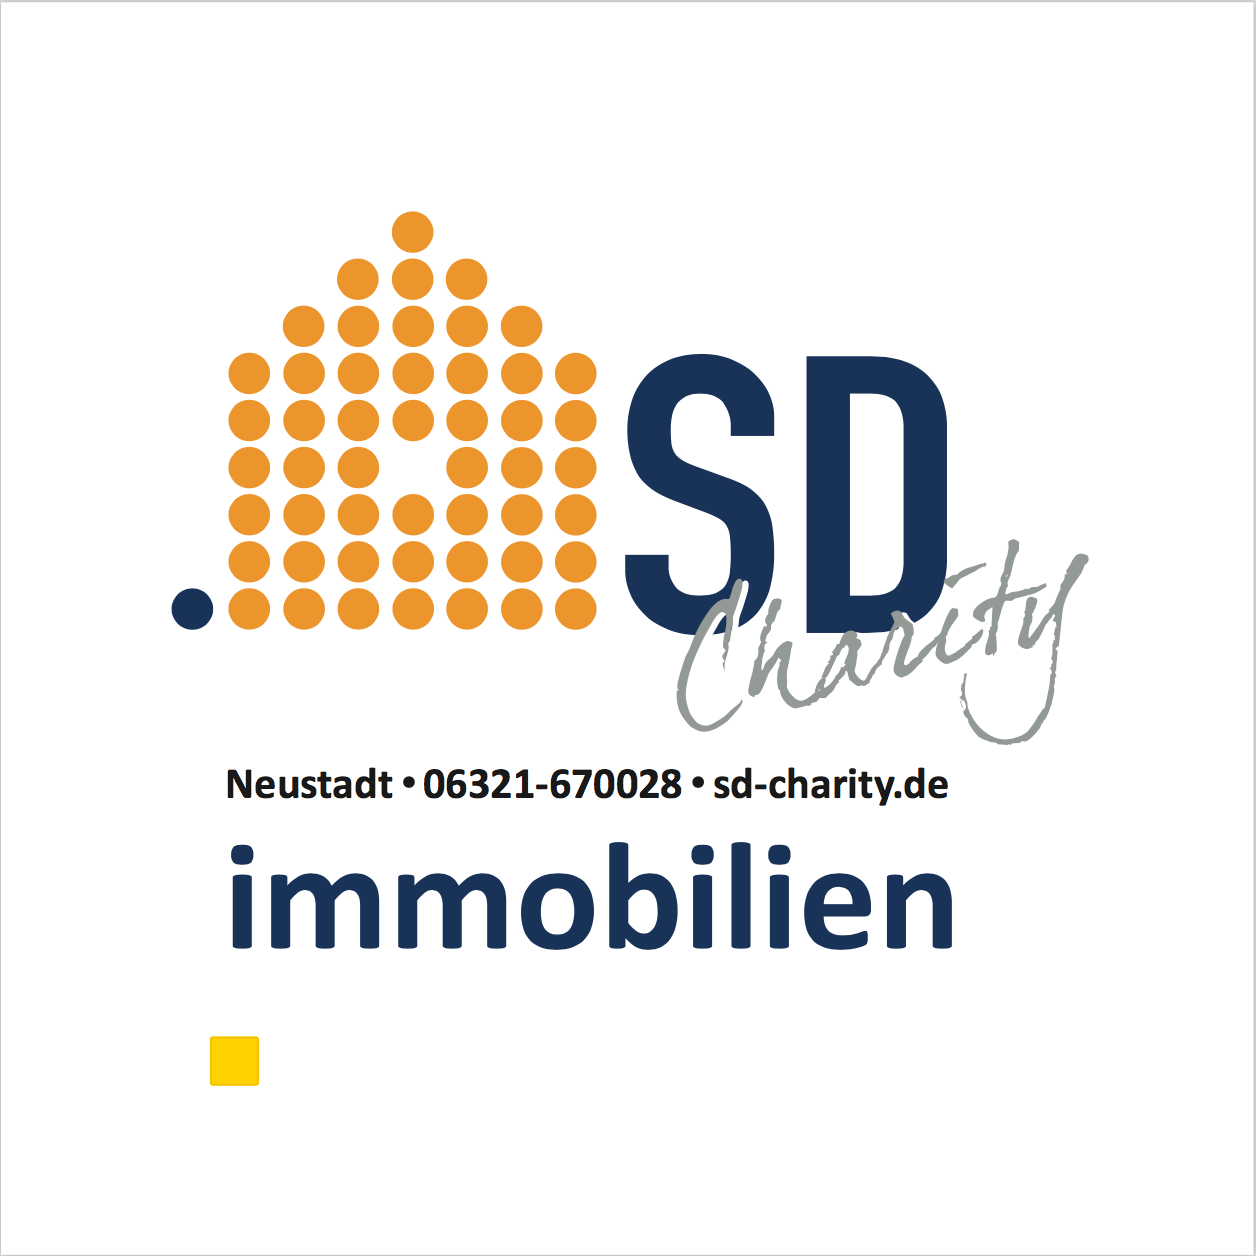 sd-charity